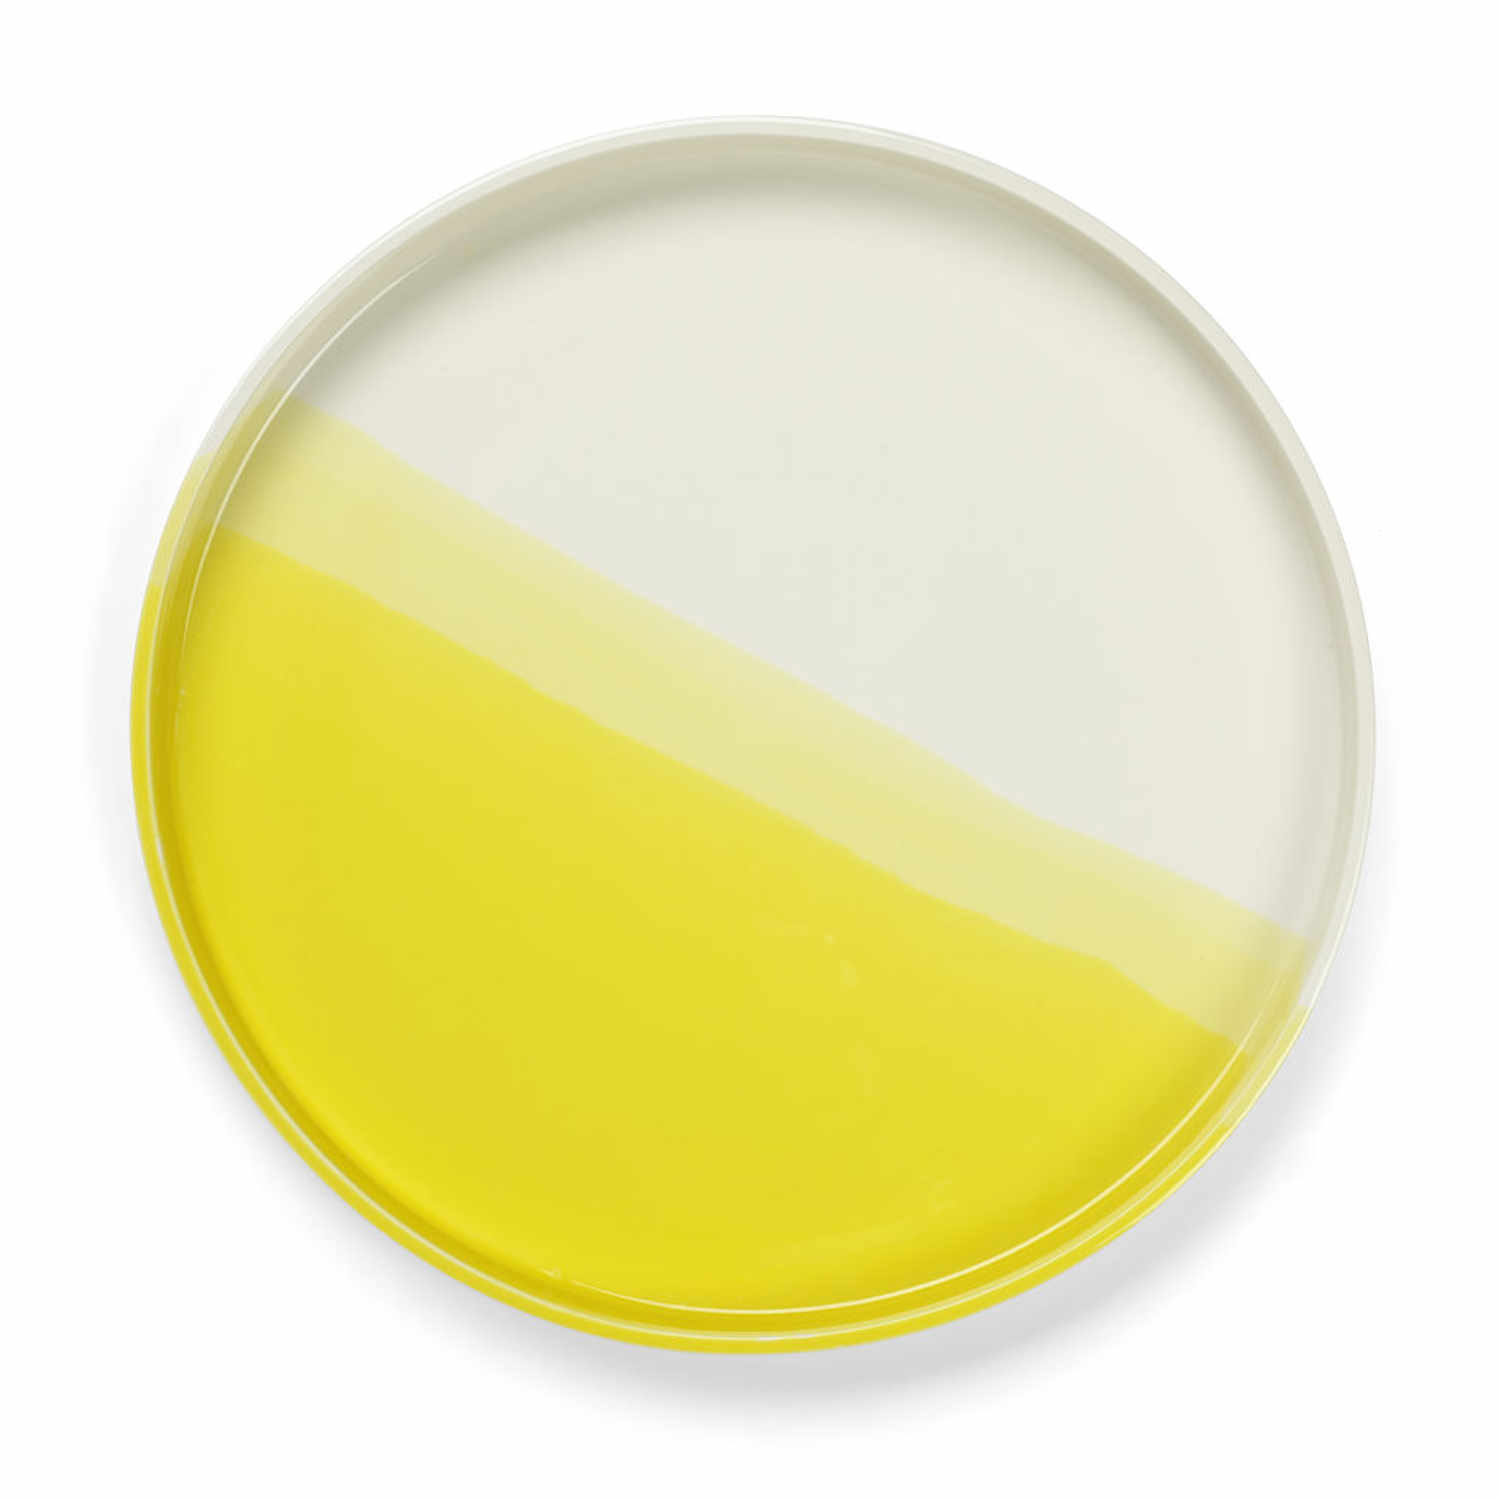 Herringbone Vessels Tray Tablett, Farbe gelb von Vitra